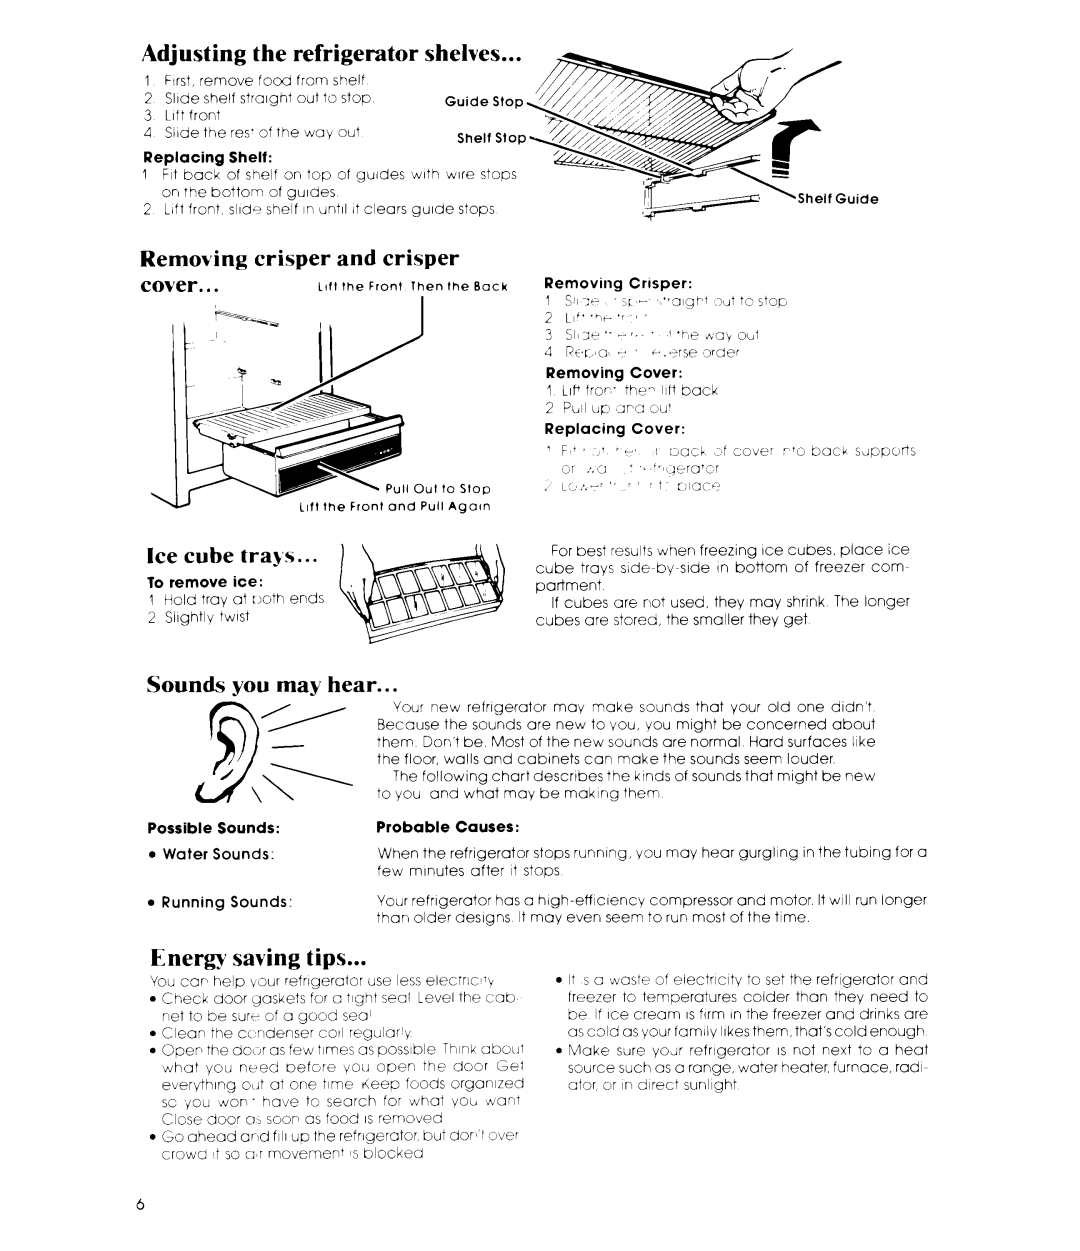 Whirlpool EL15CC manual Adjusting the refrigerator shelves, Removing, crisper and crisper, cover, Ice cube tra&‘s 